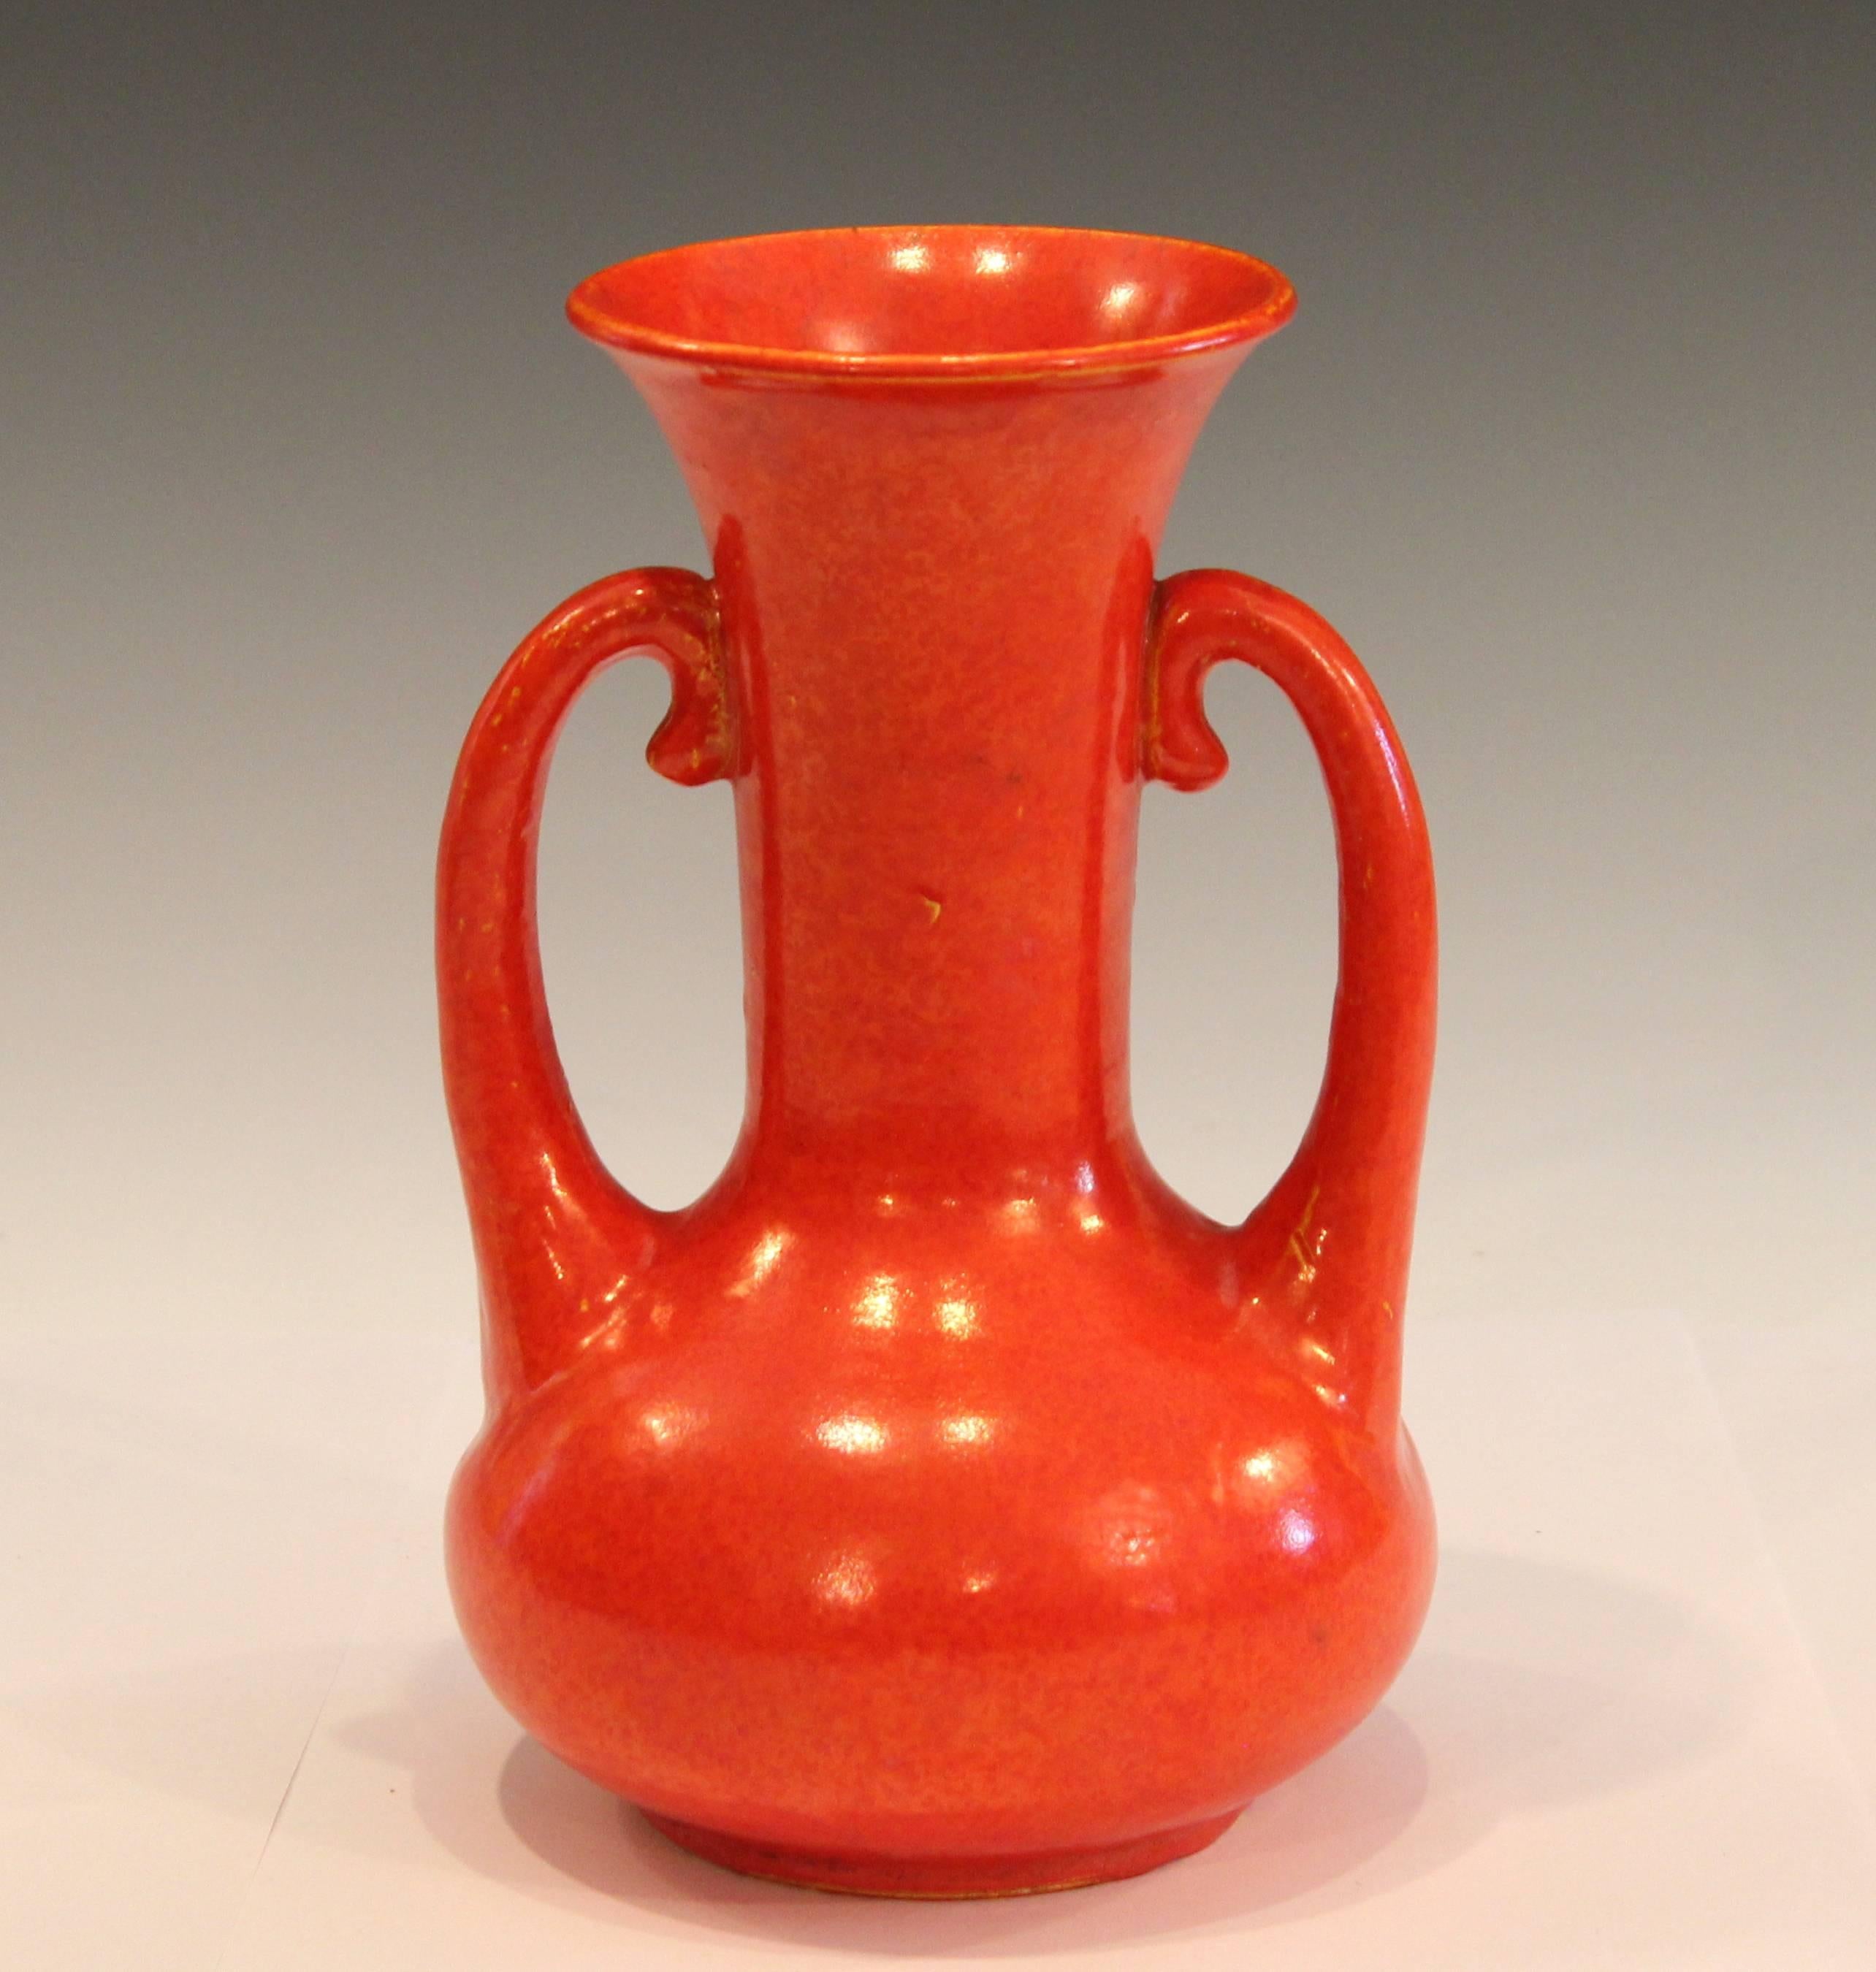 Vintage hand-turned Awaji Pottery vase with great atomic chrome orange glaze, circa 1930. Impressed marks partially obscured by glaze. 8